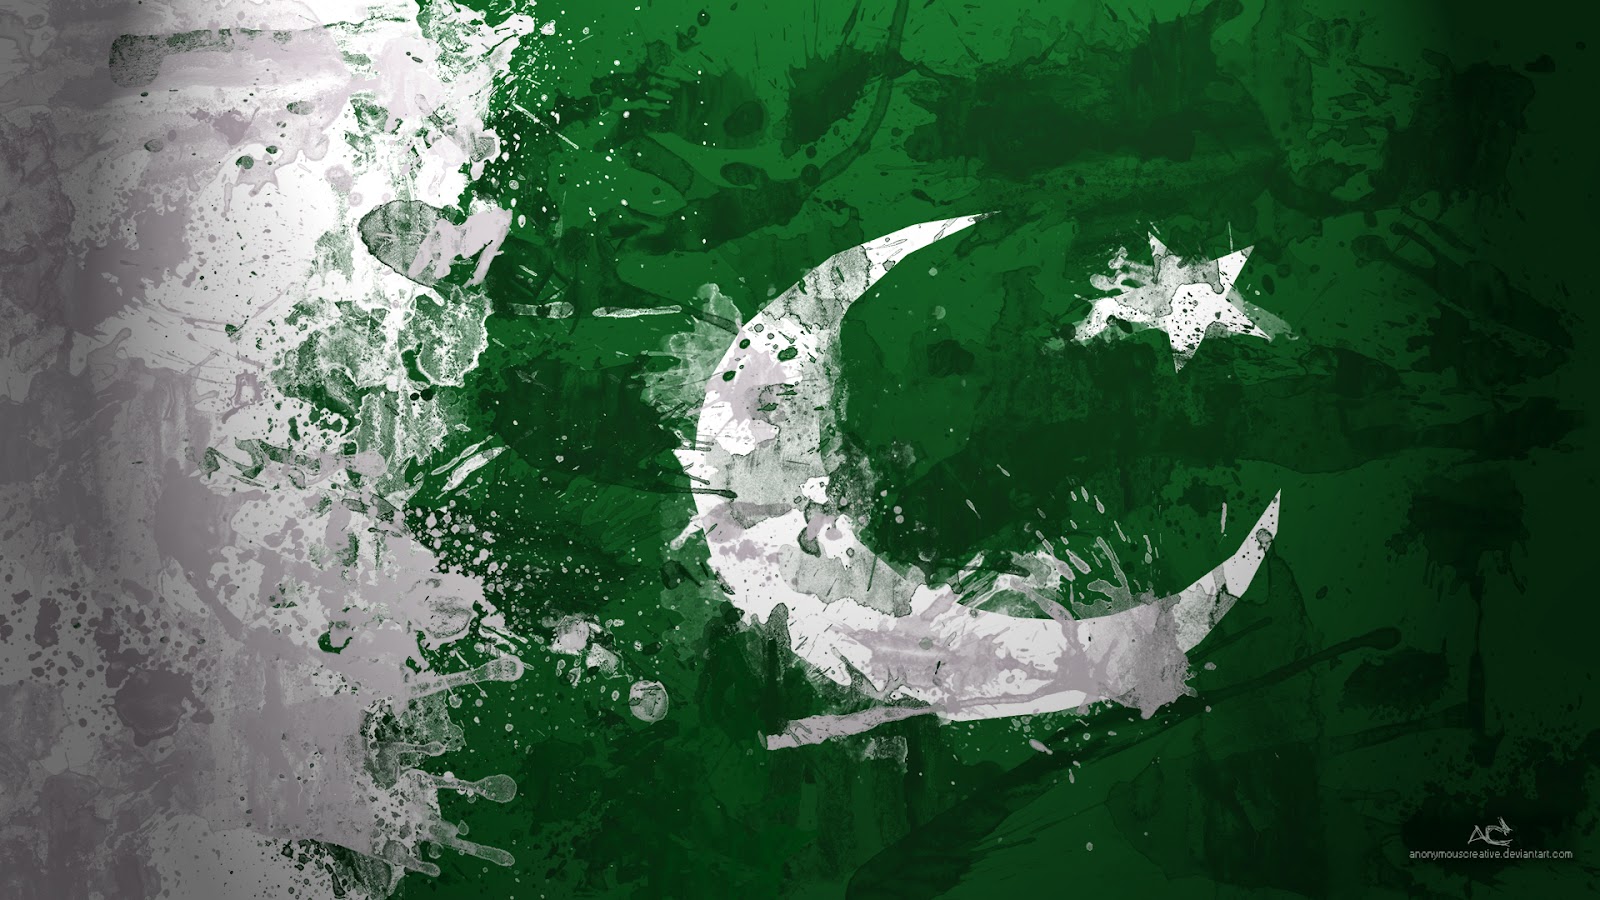 Pakistan National Flag Wallpapers